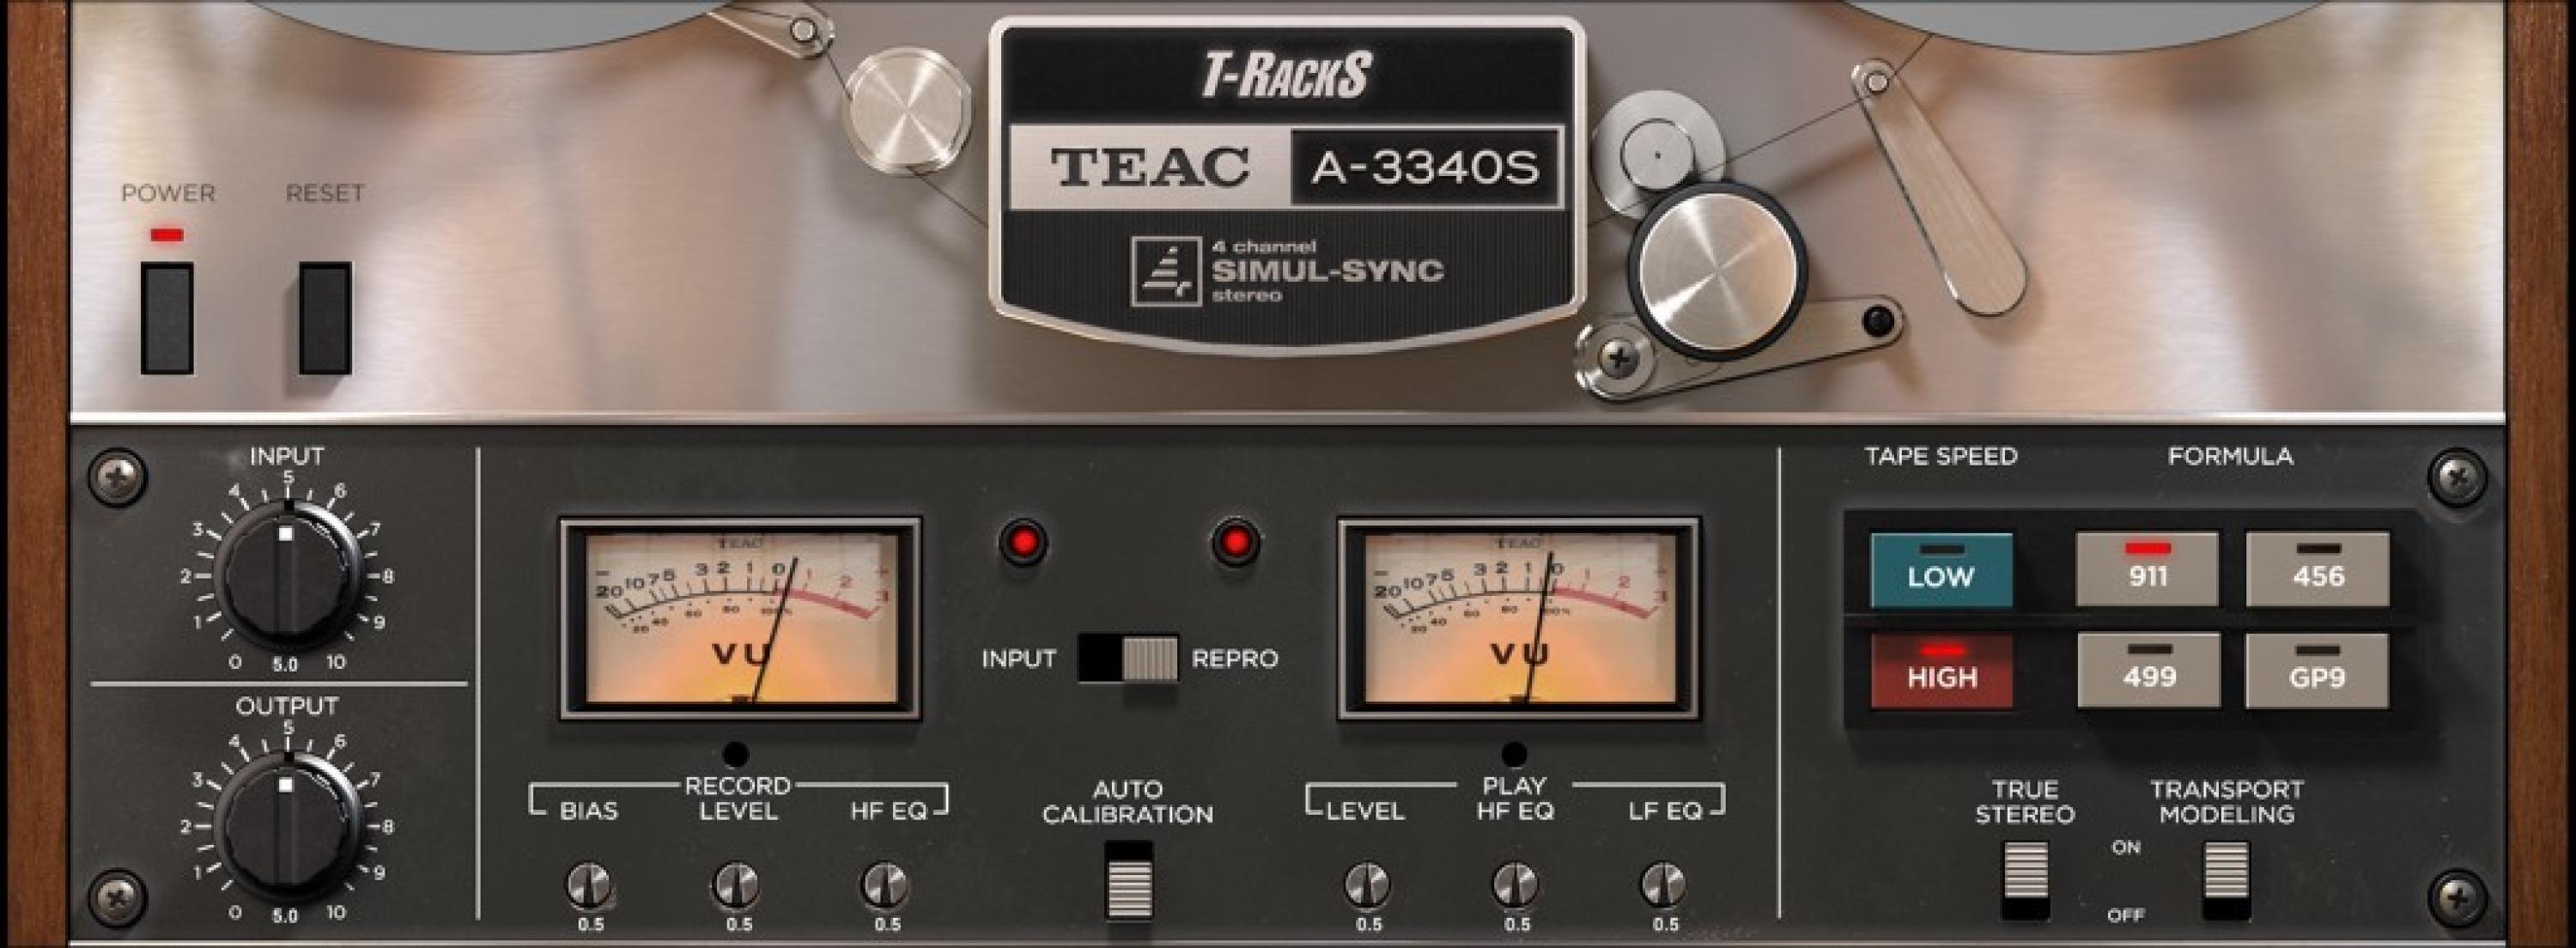 IK Multimedia T-RackS TEAC A-3340S Plug-in